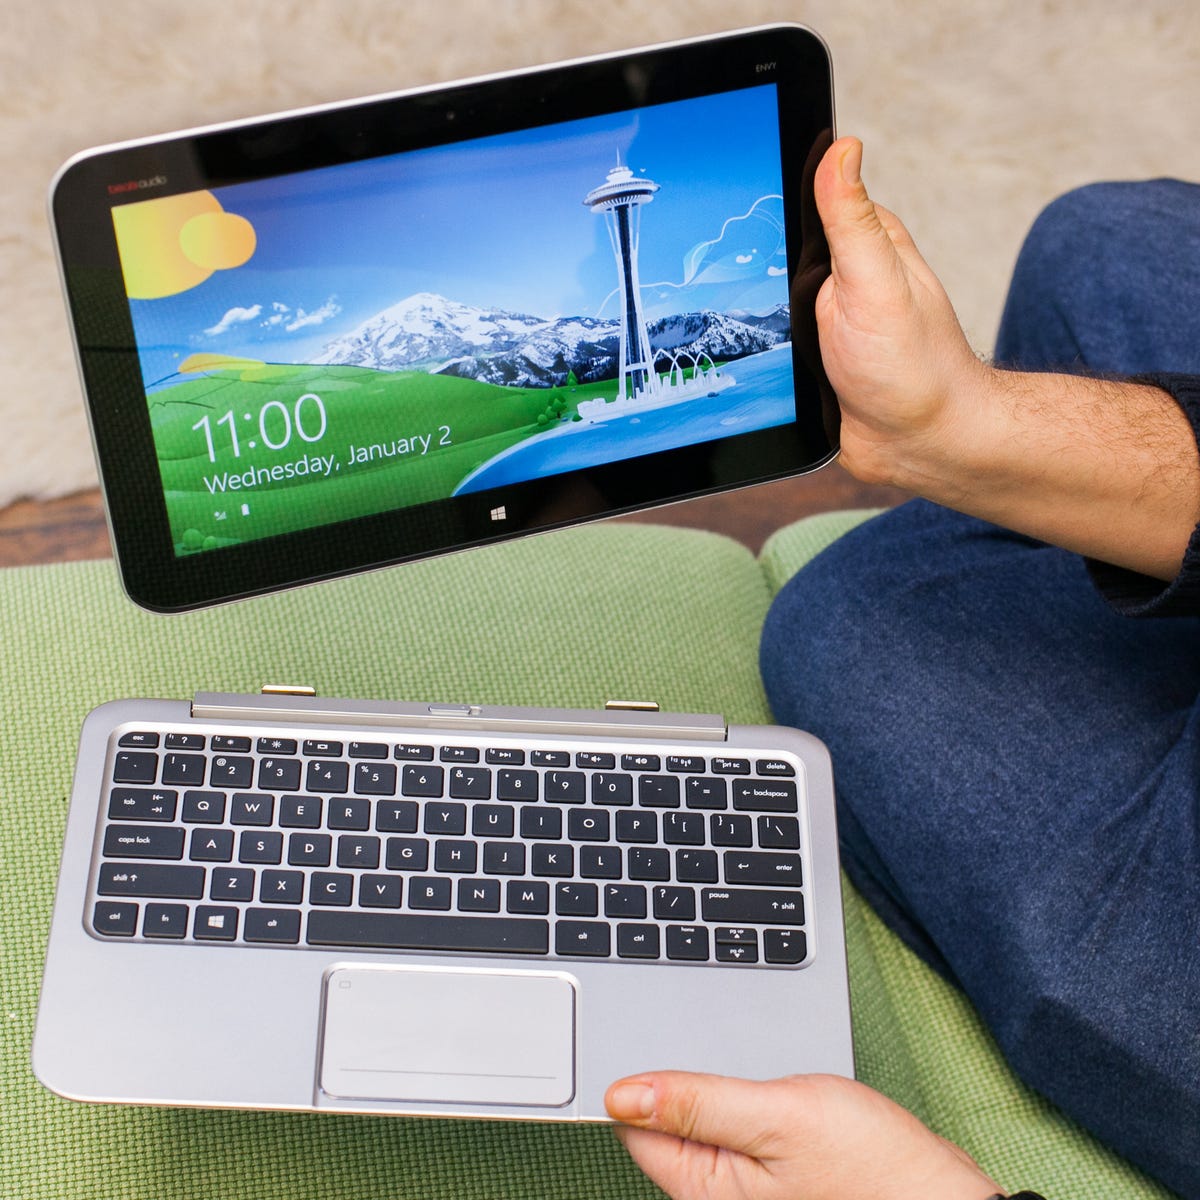 HP Envy x2 review: Half-tablet, half-laptop, all Atom - CNET